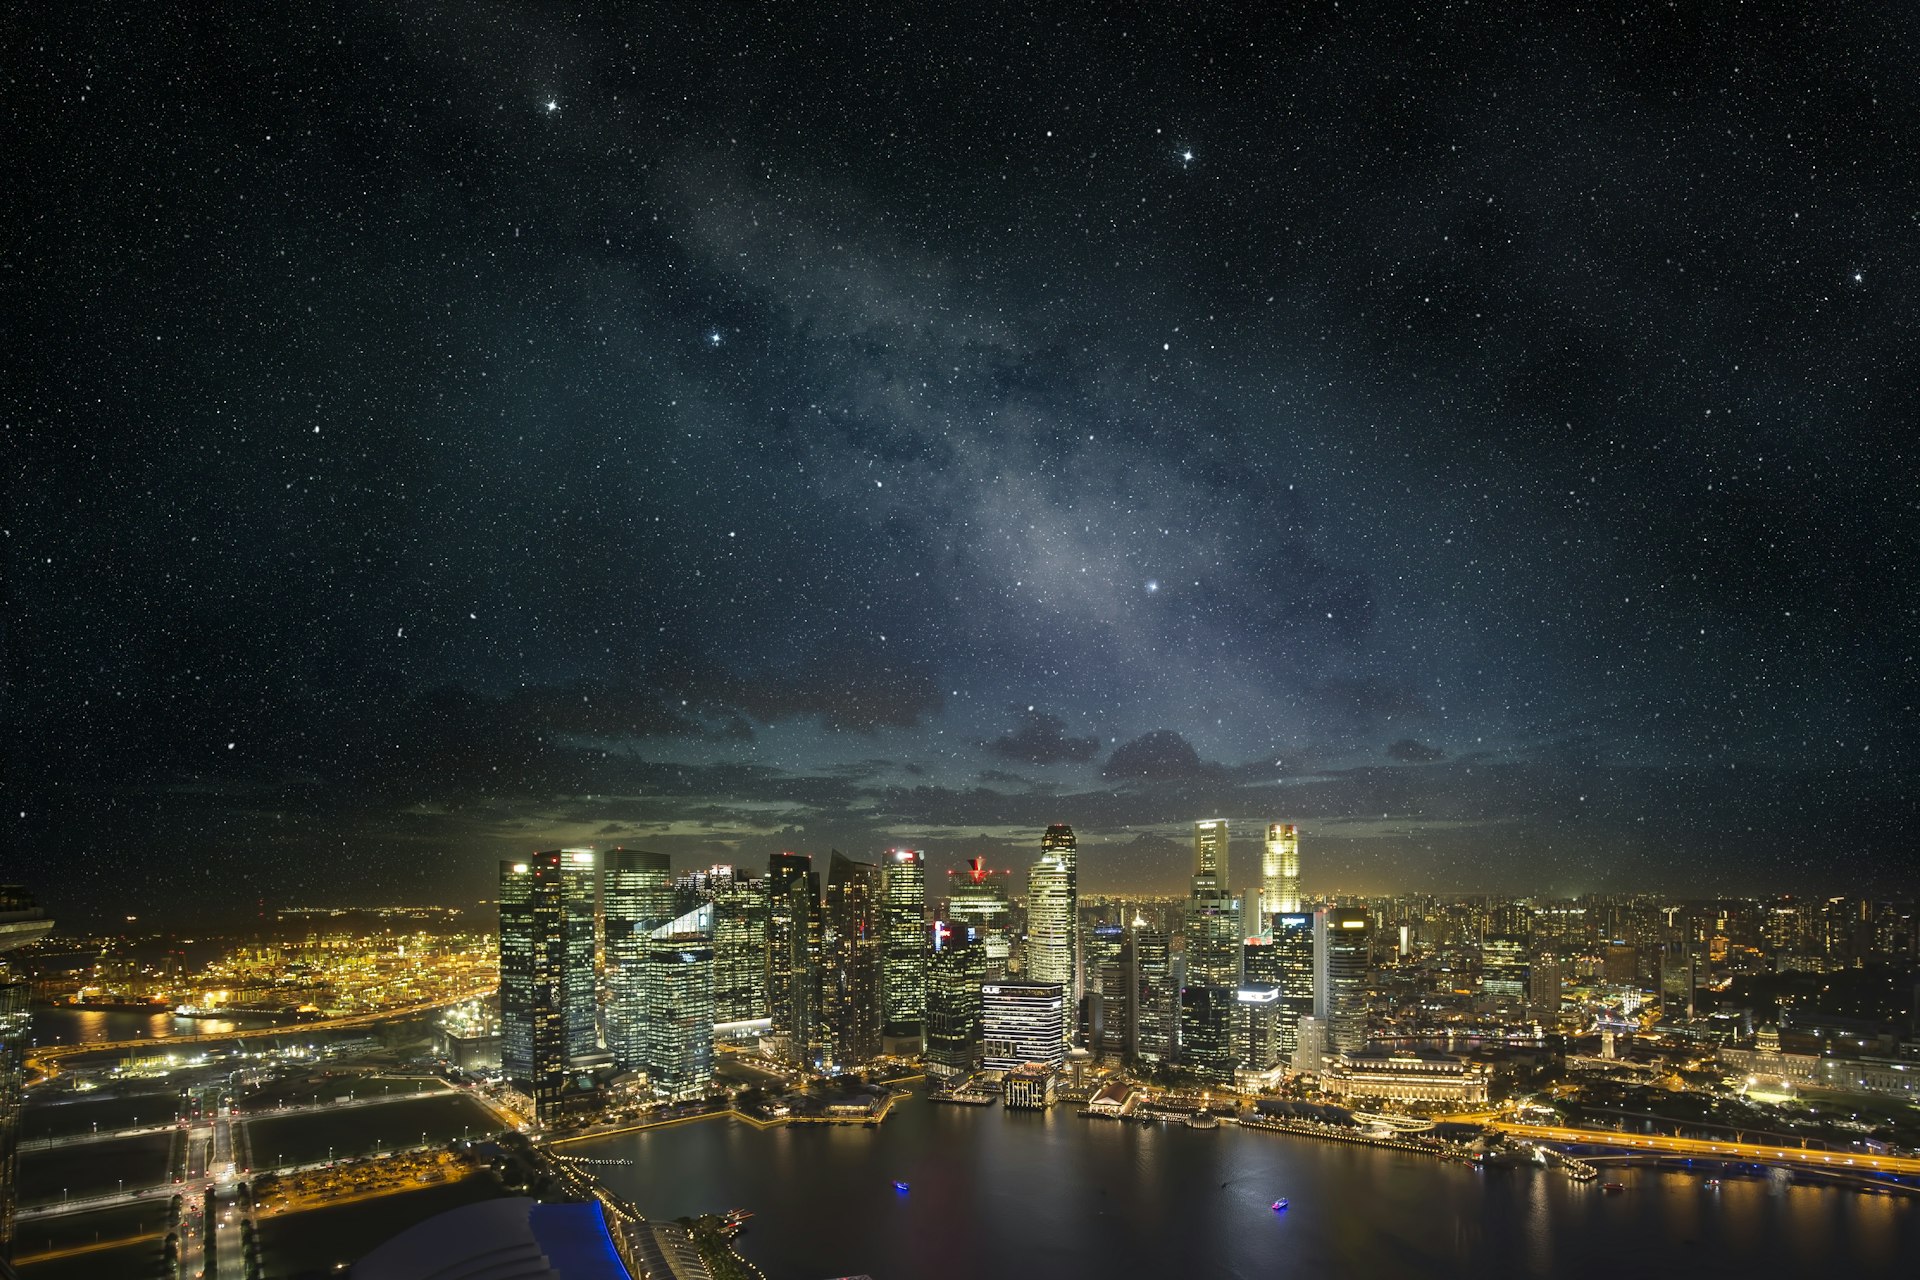 Singapore skyline at night, under a starry night sky.